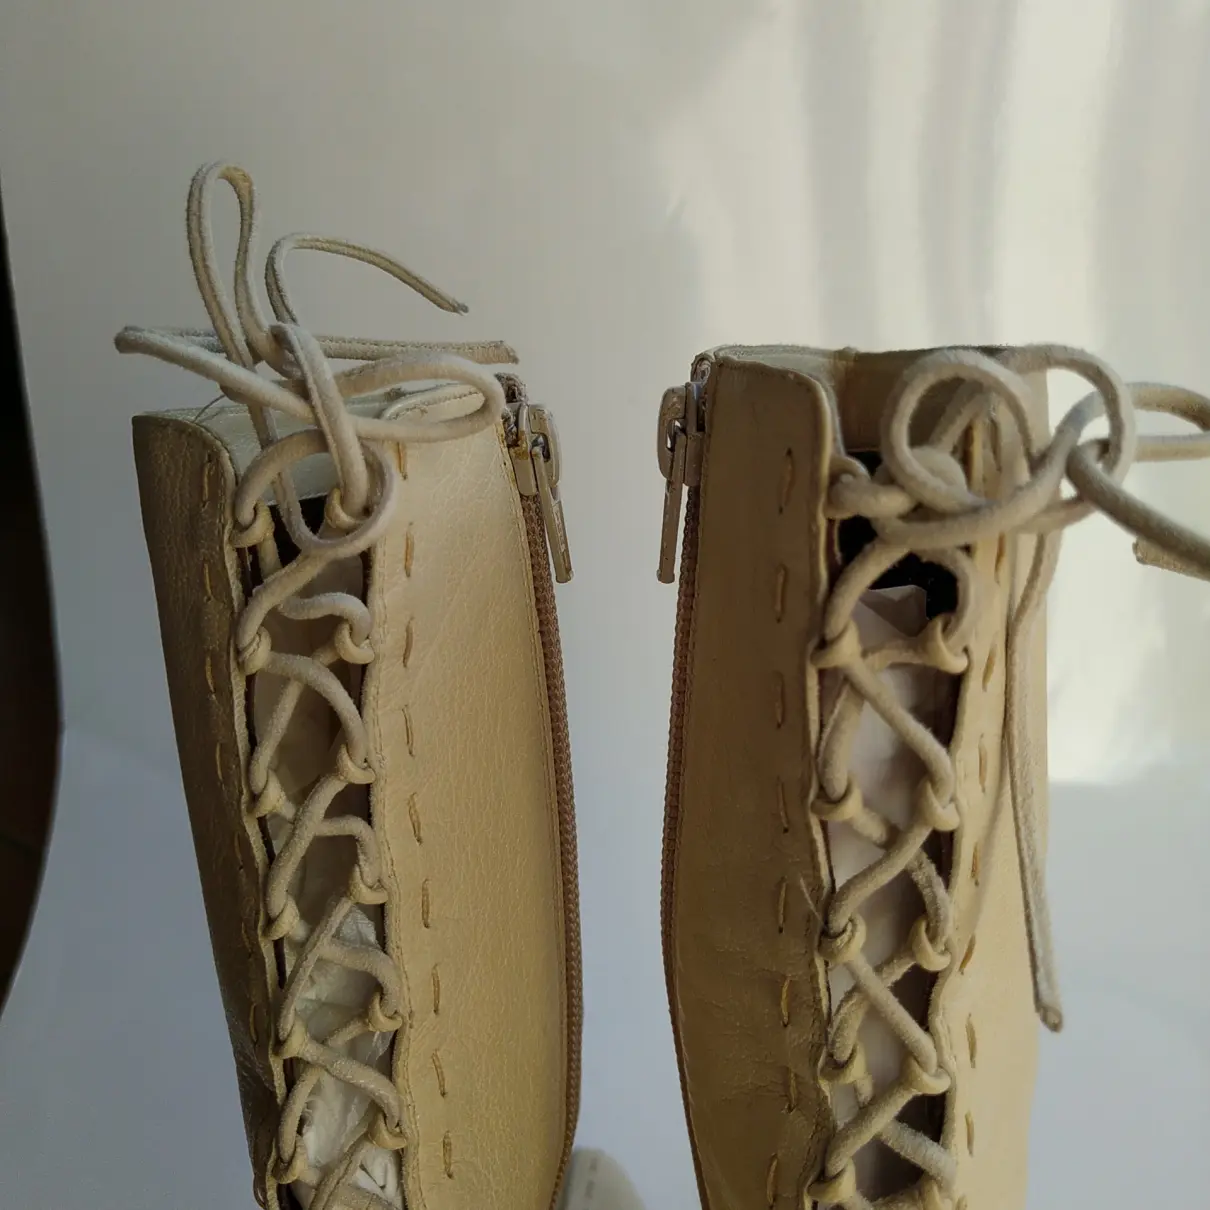 Leather ankle boots Emanuel Ungaro - Vintage